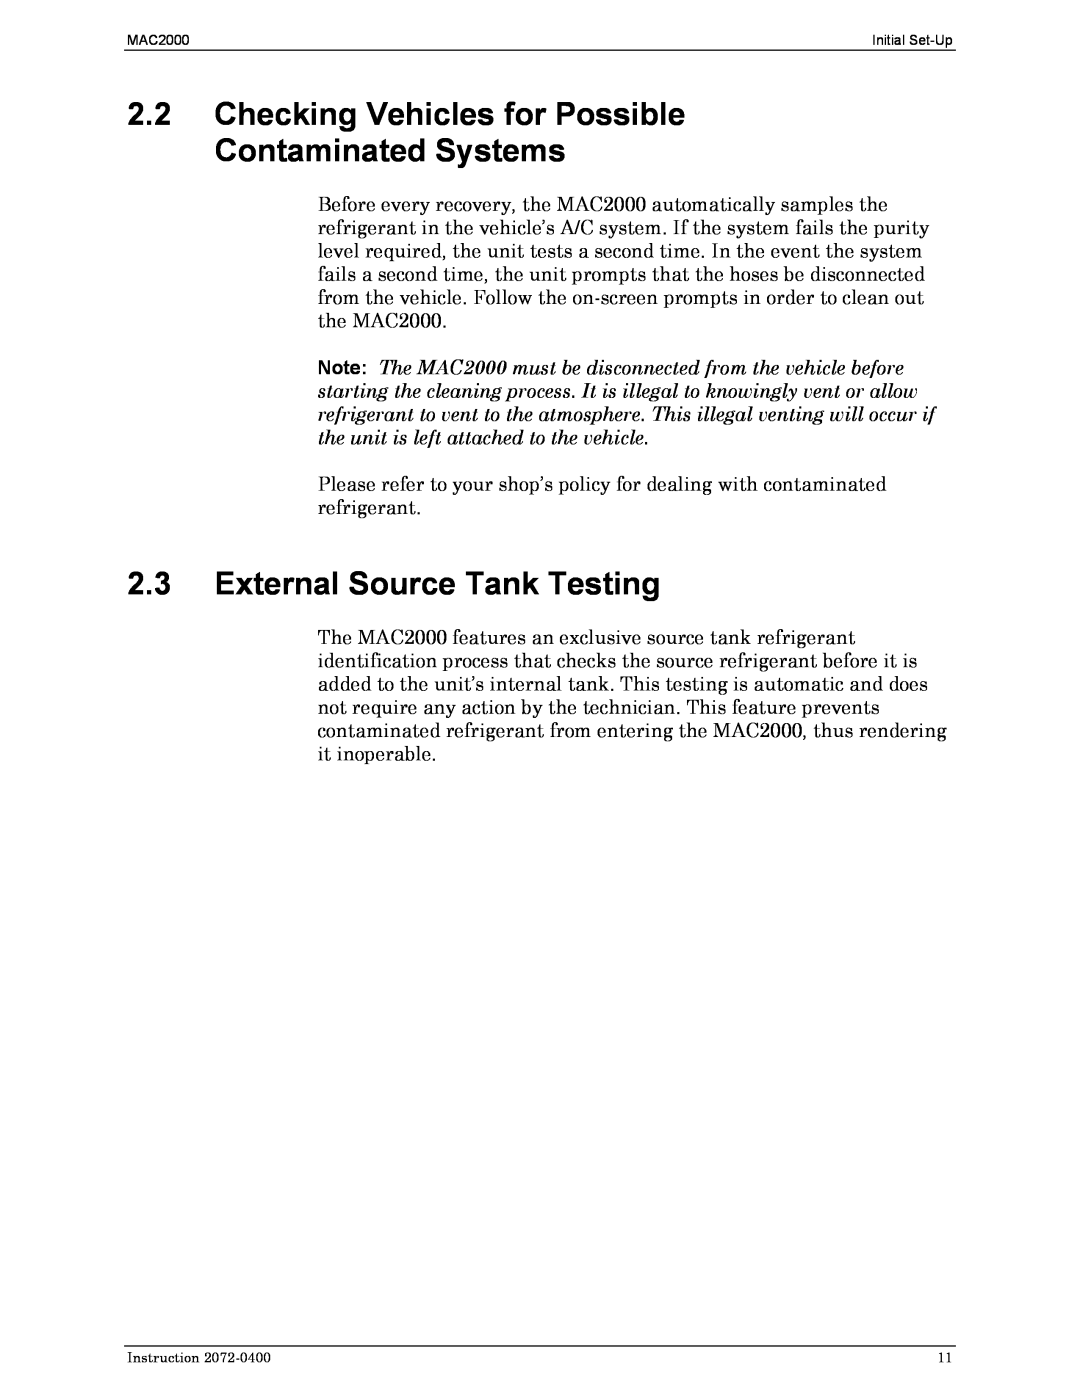 Bacharach 2072-0400 manual 2.3External Source Tank Testing, Instruction 